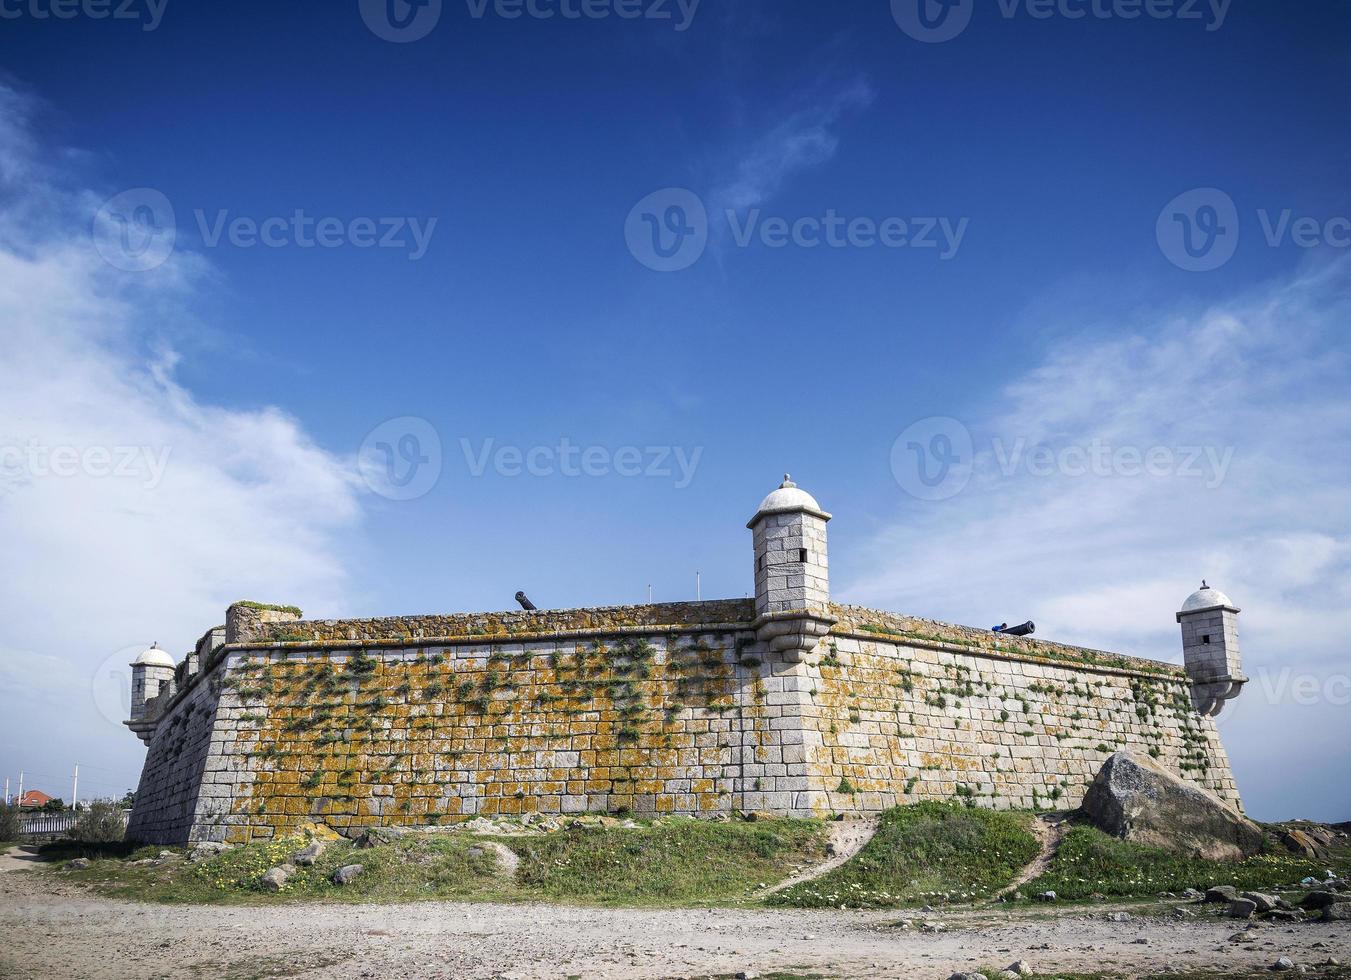 castelo do queijo fort landmark on porto coast portugal photo